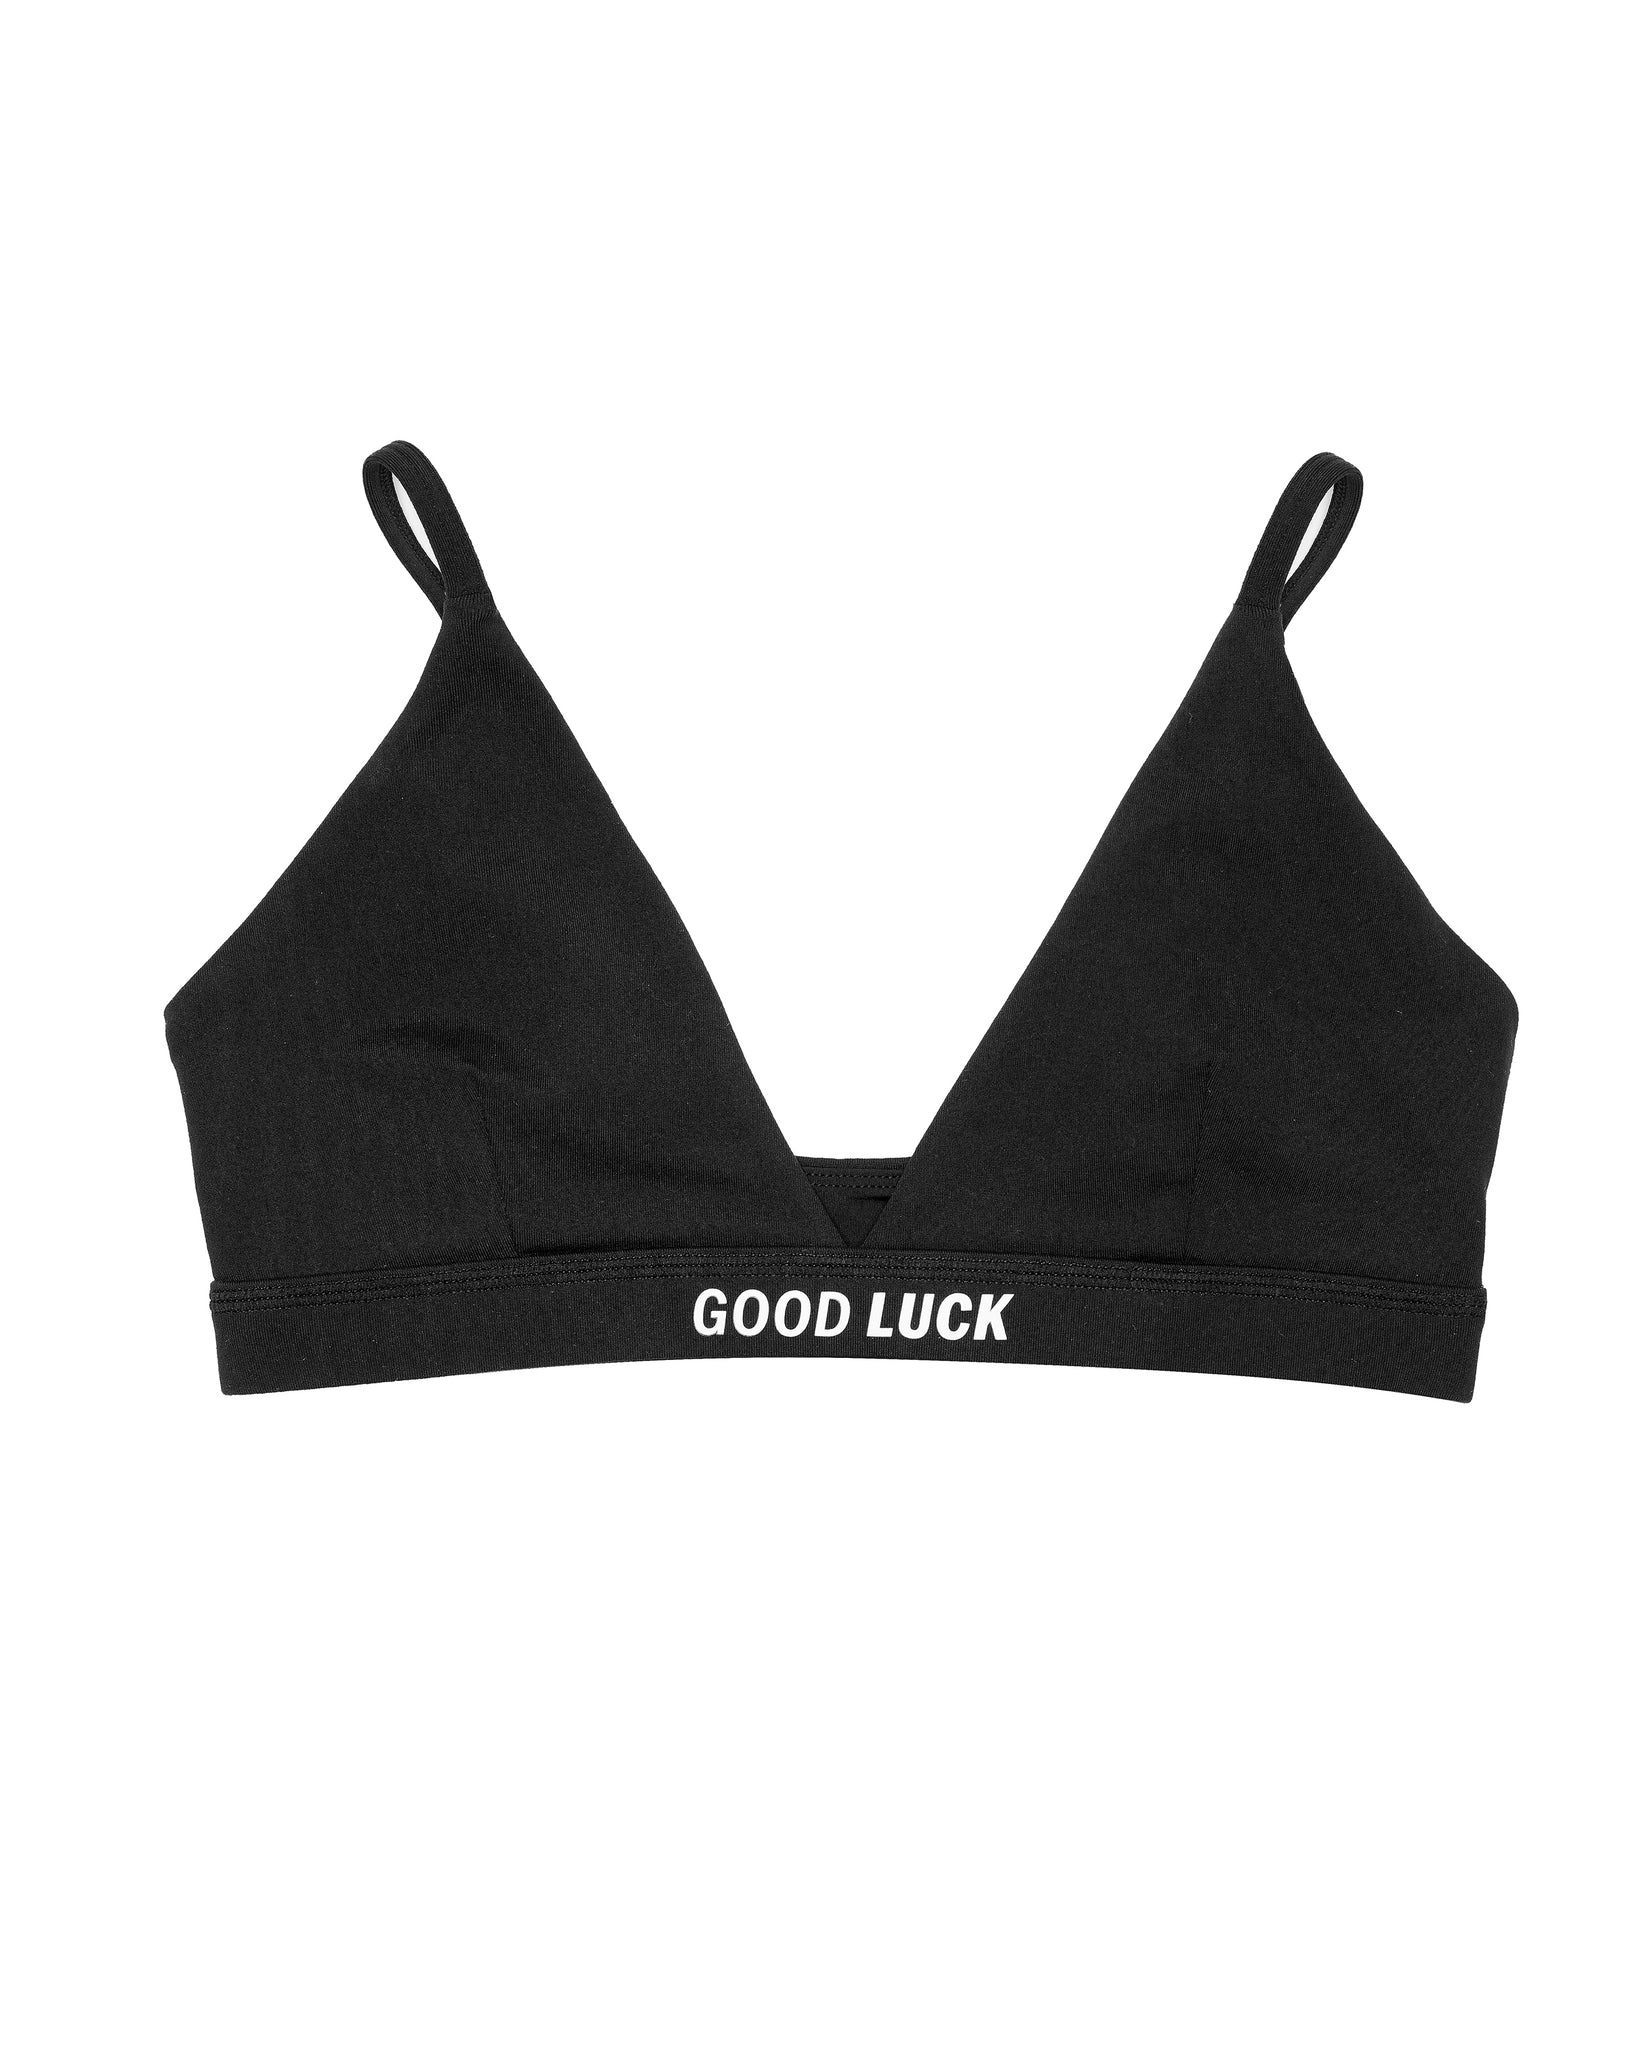 "Good Luck" Womens Sports Bra (Black)